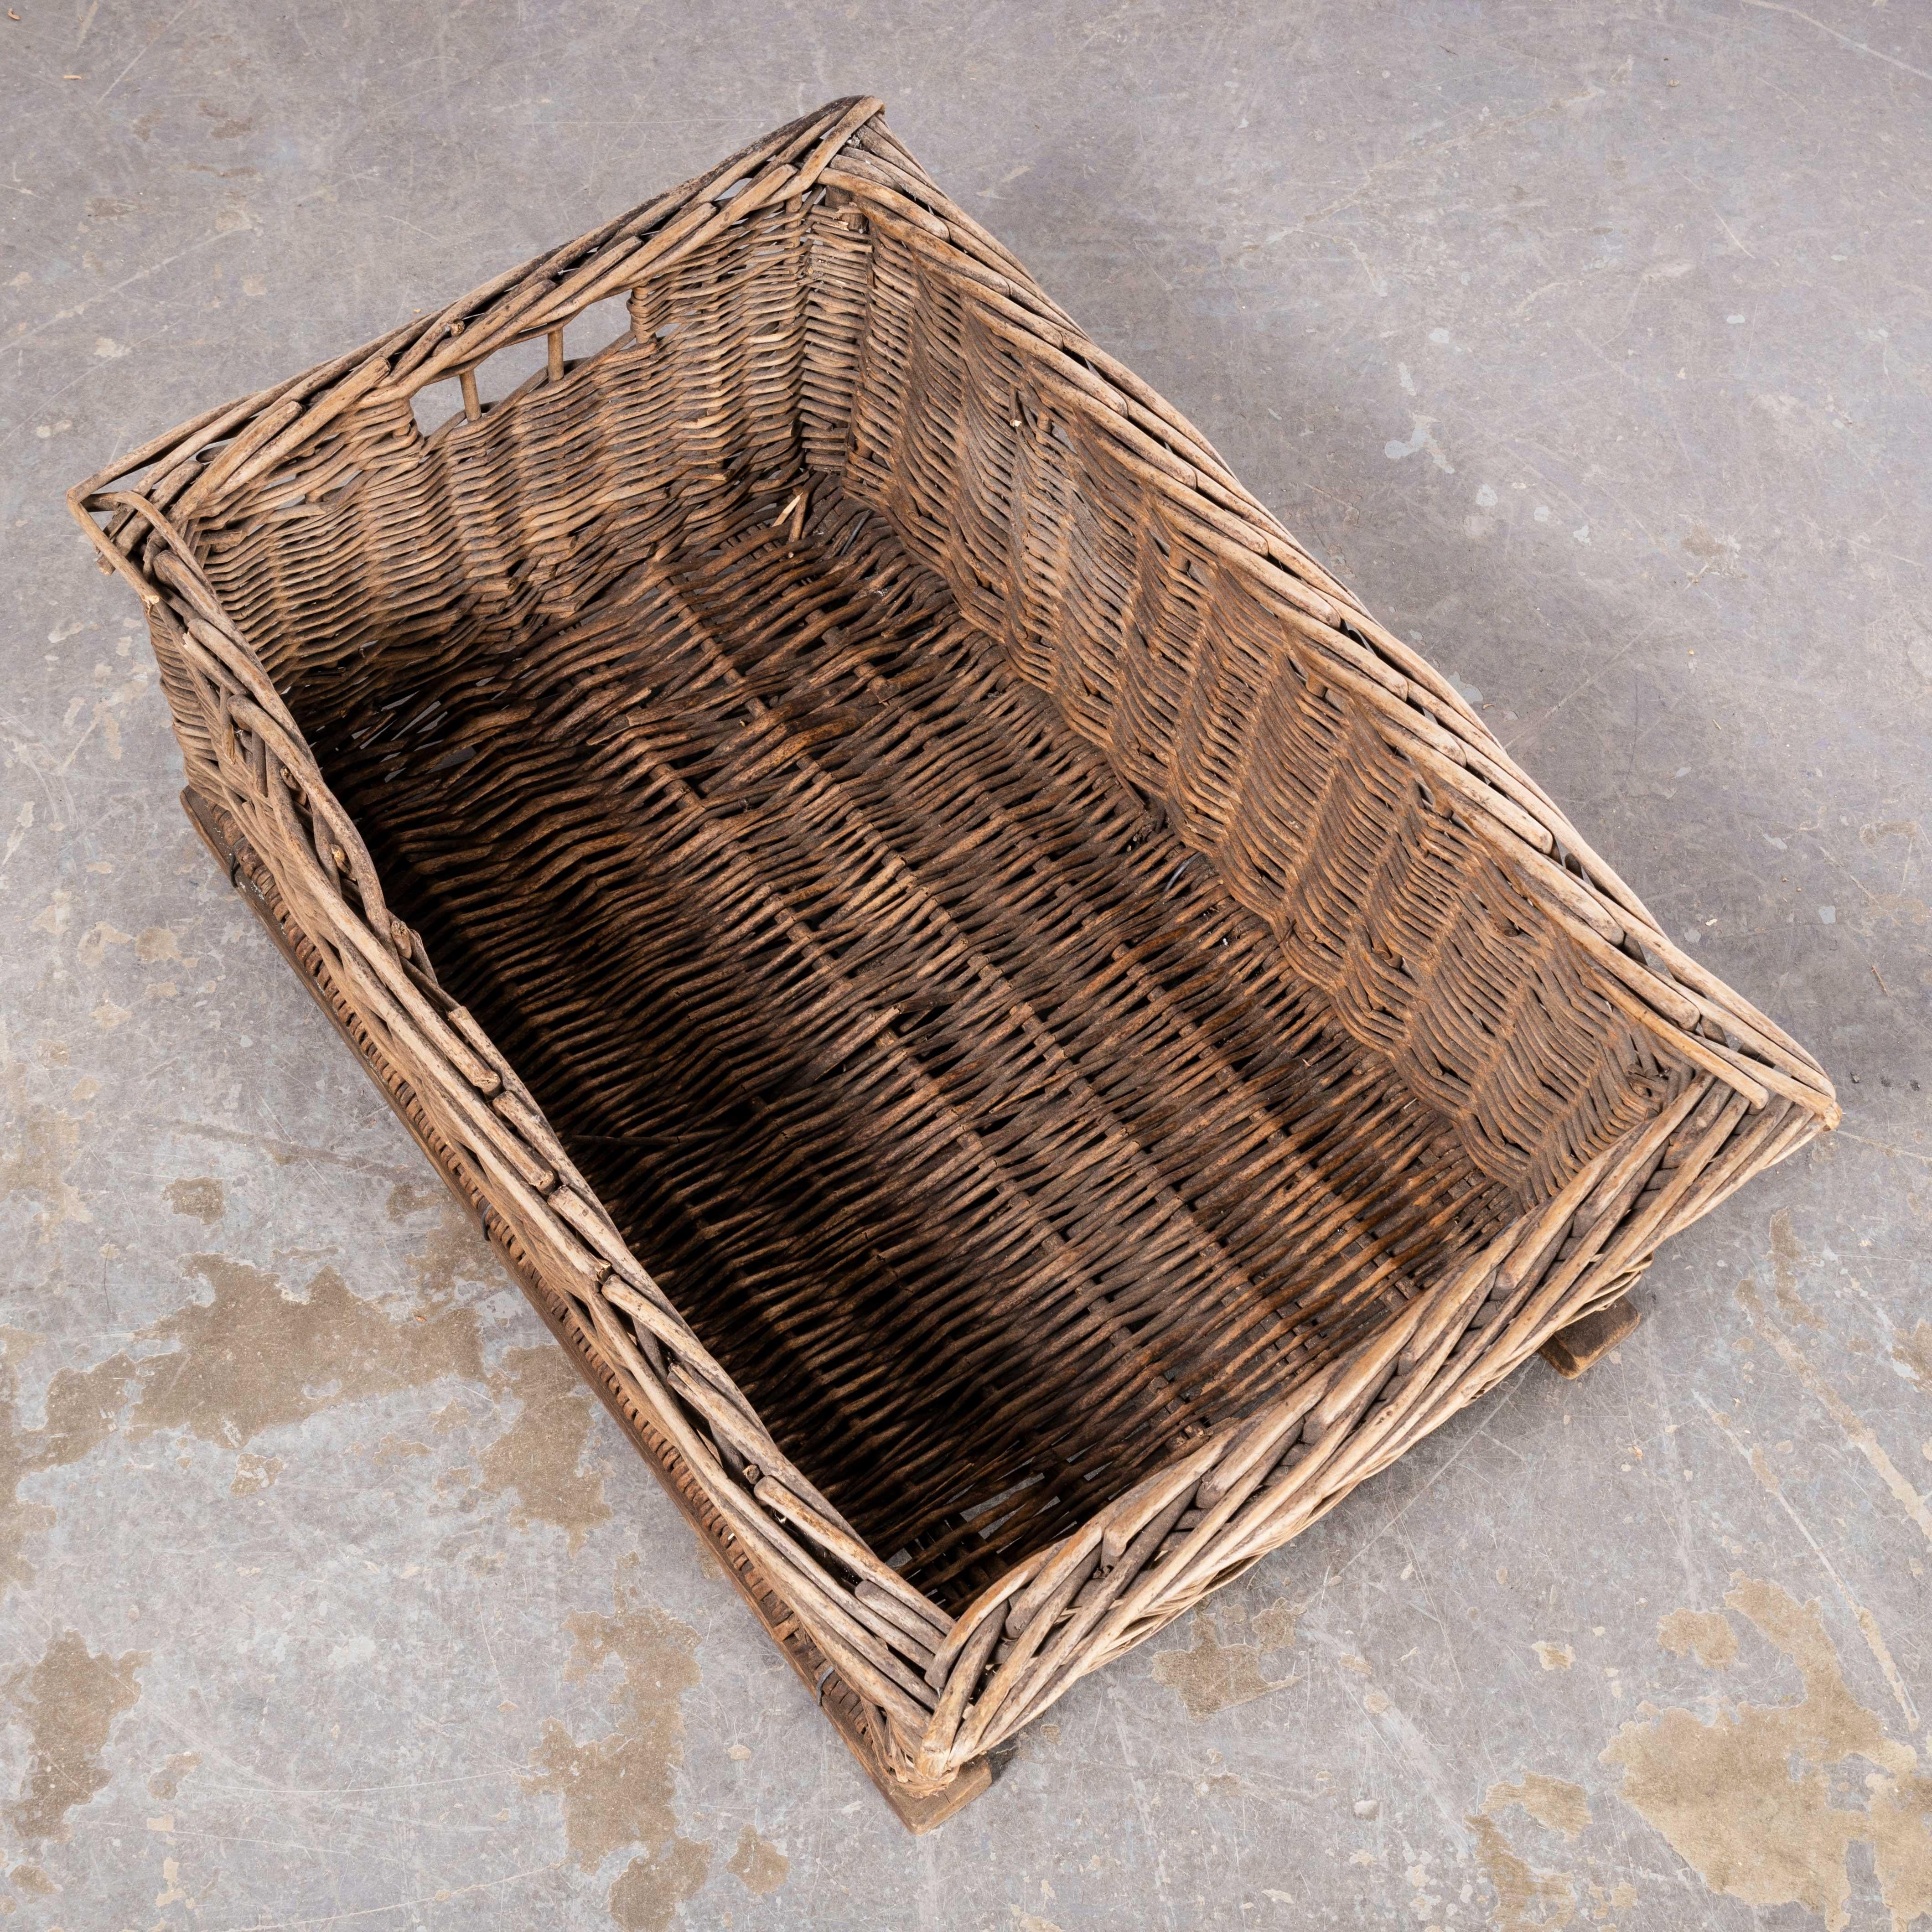 Rattan Original French Handmade Willow Basket On Skids  (1550.3)